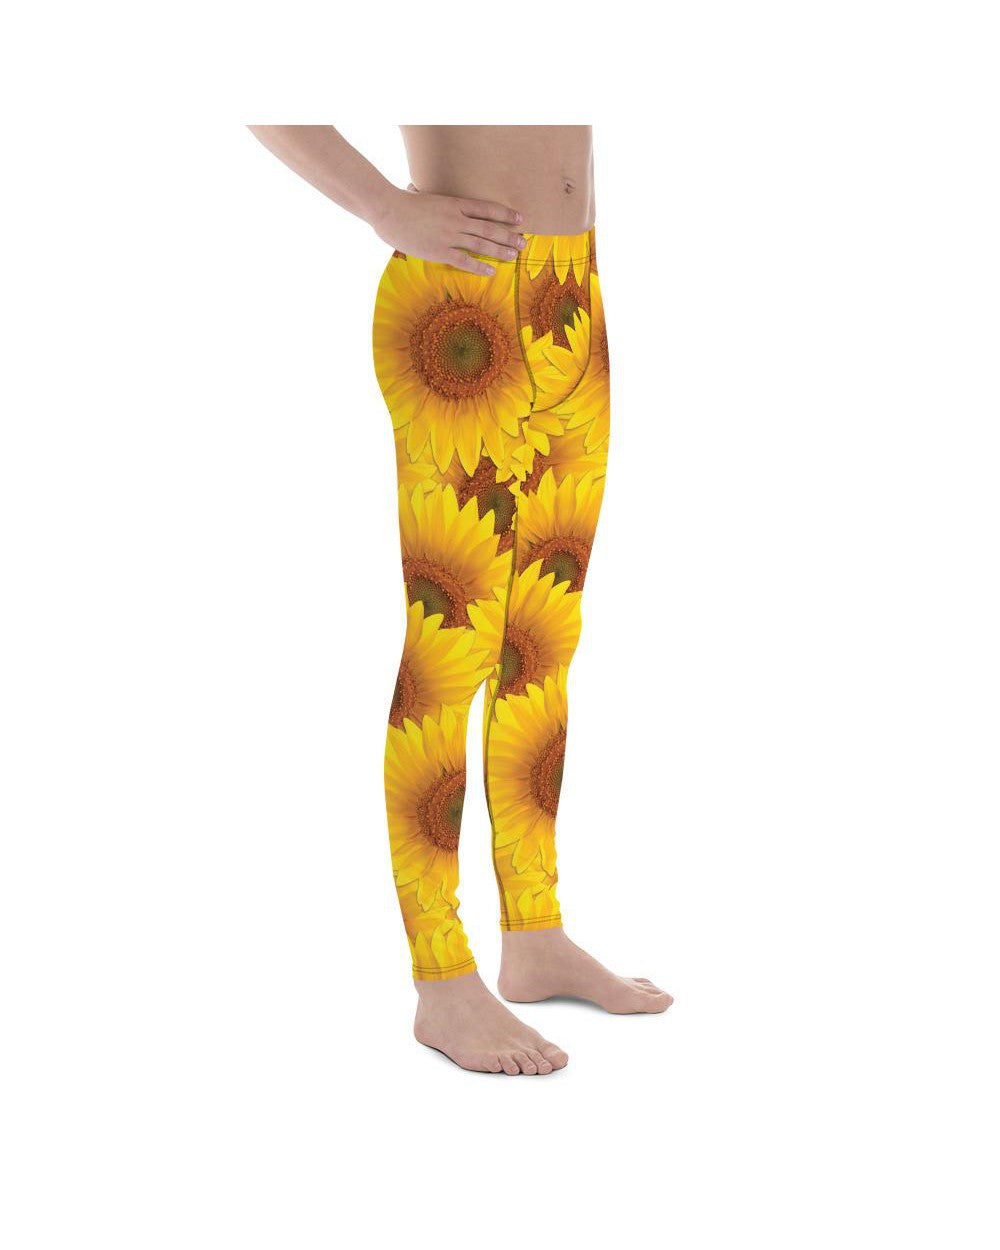 Sunflower Meggings Gearbunch Men's Leggings